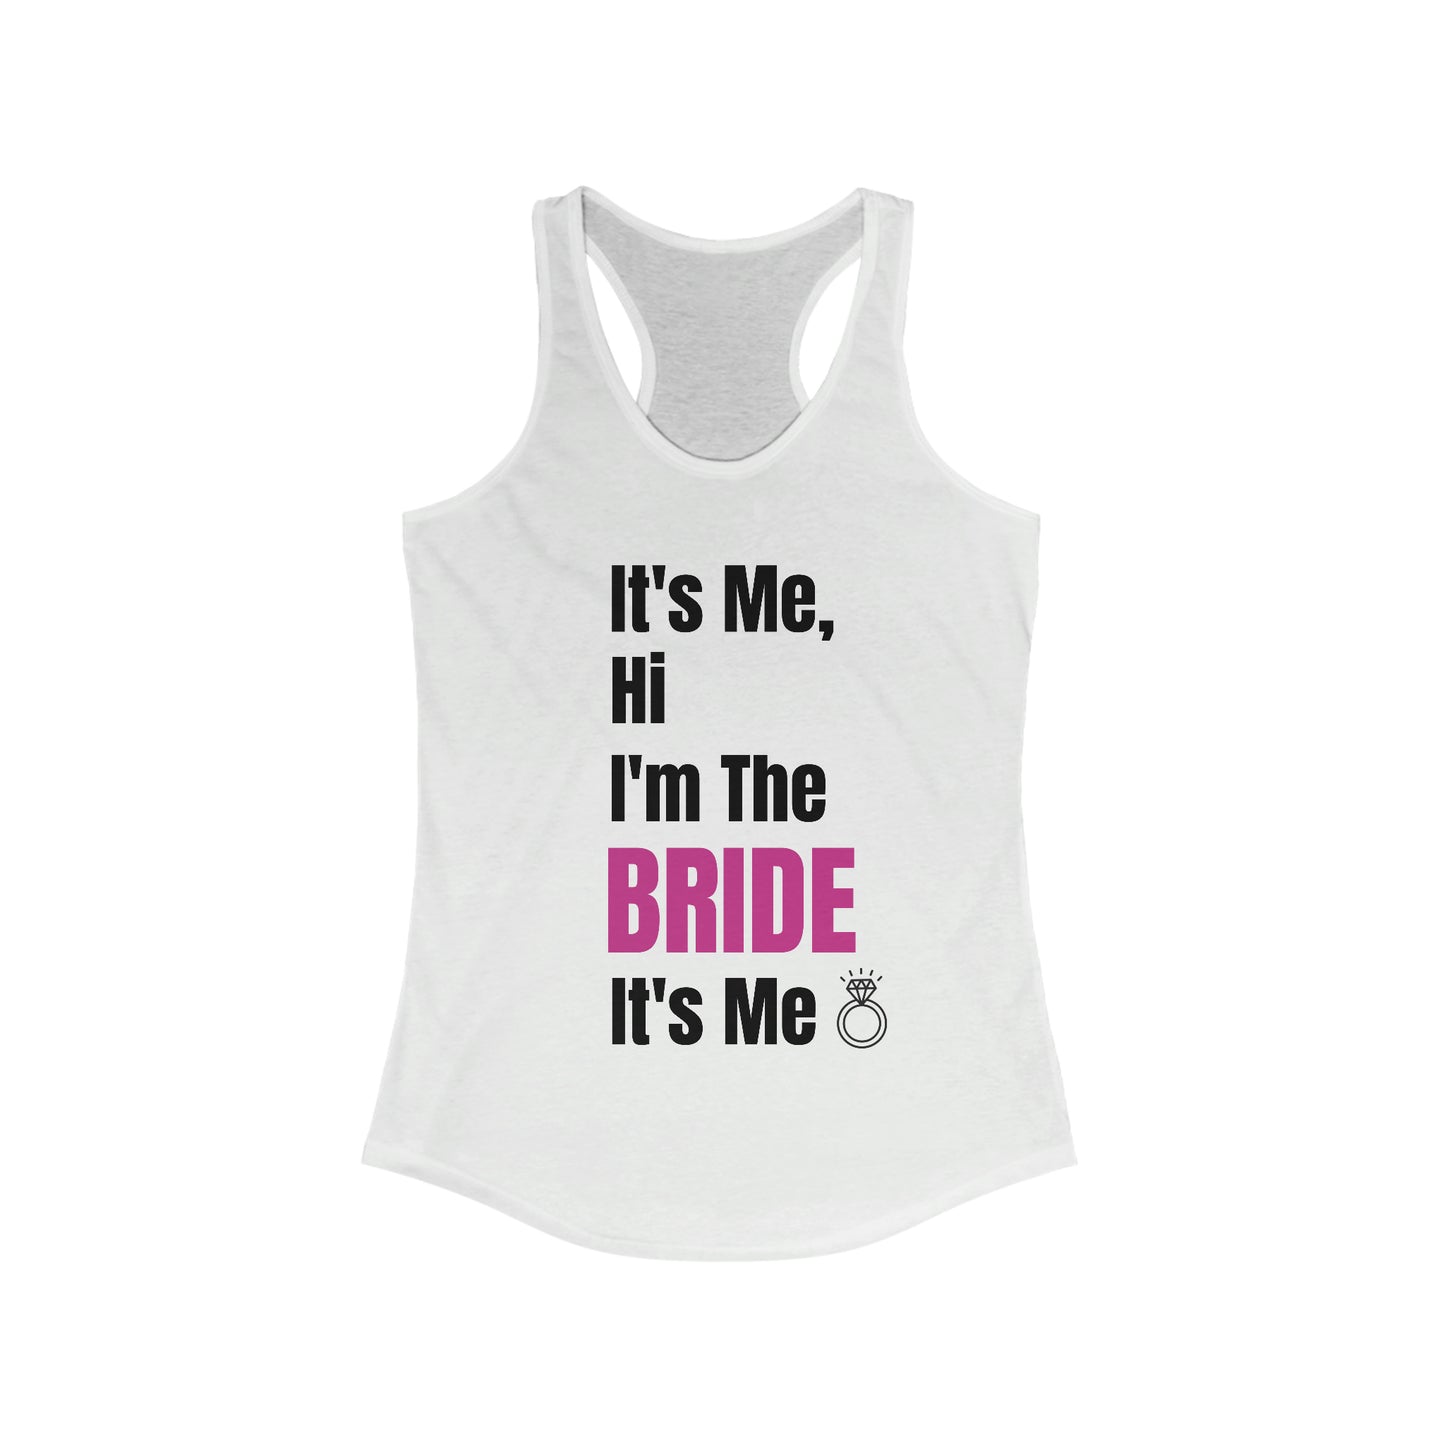 "It's Me, Hi I'm The Bride It's Me" Racerback Tank